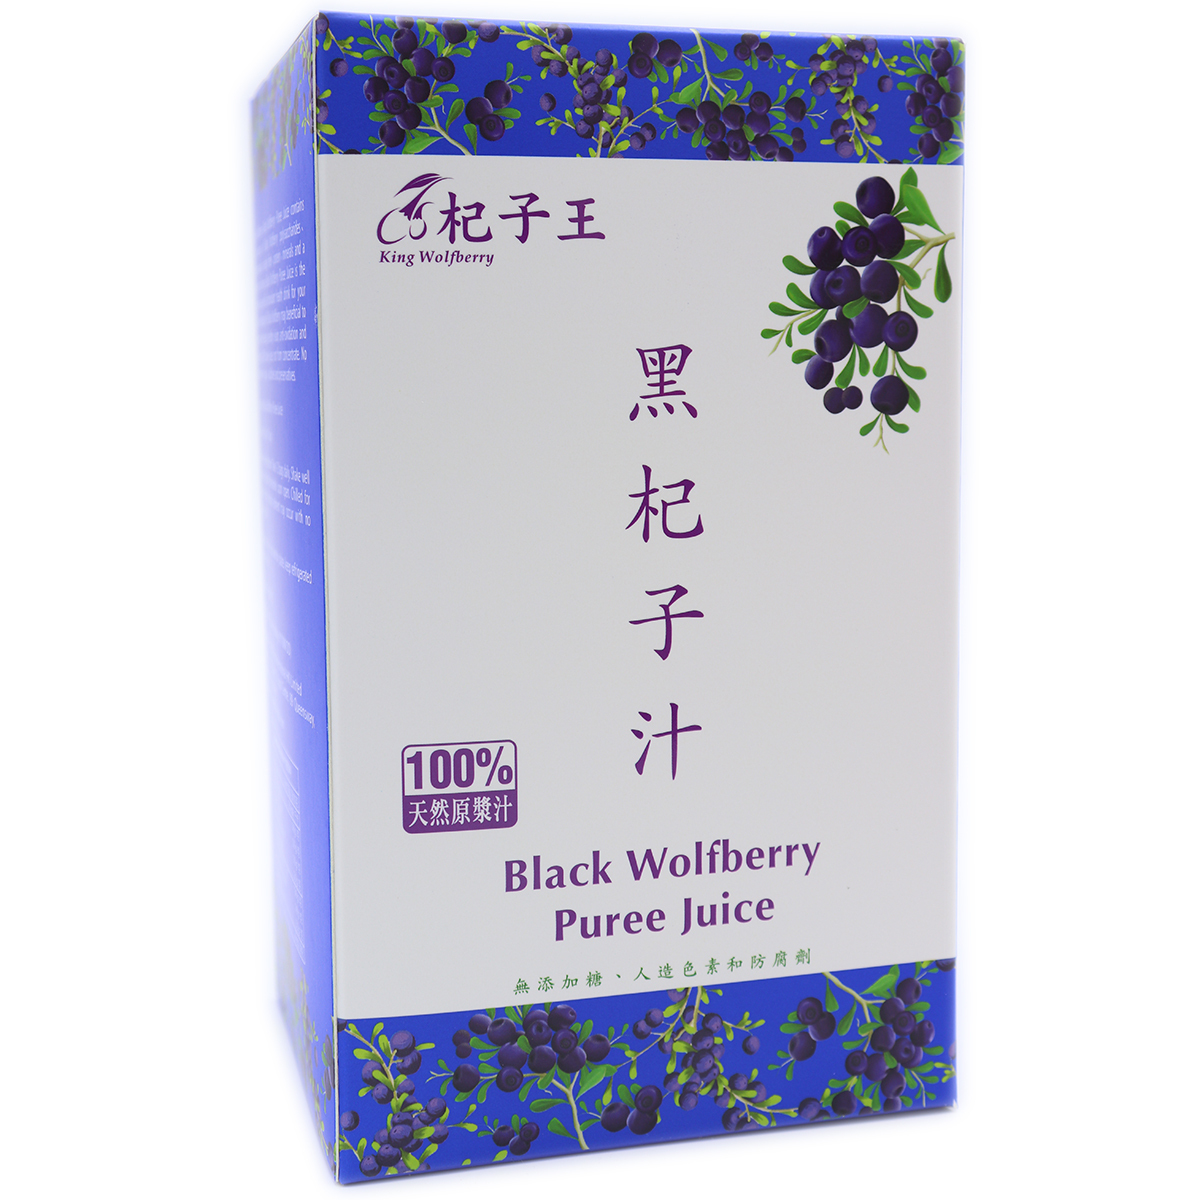 Black Wolfberry Puree Juice 450g (30g x 15 bags) Promote Skin Beauty Anti-oxidation